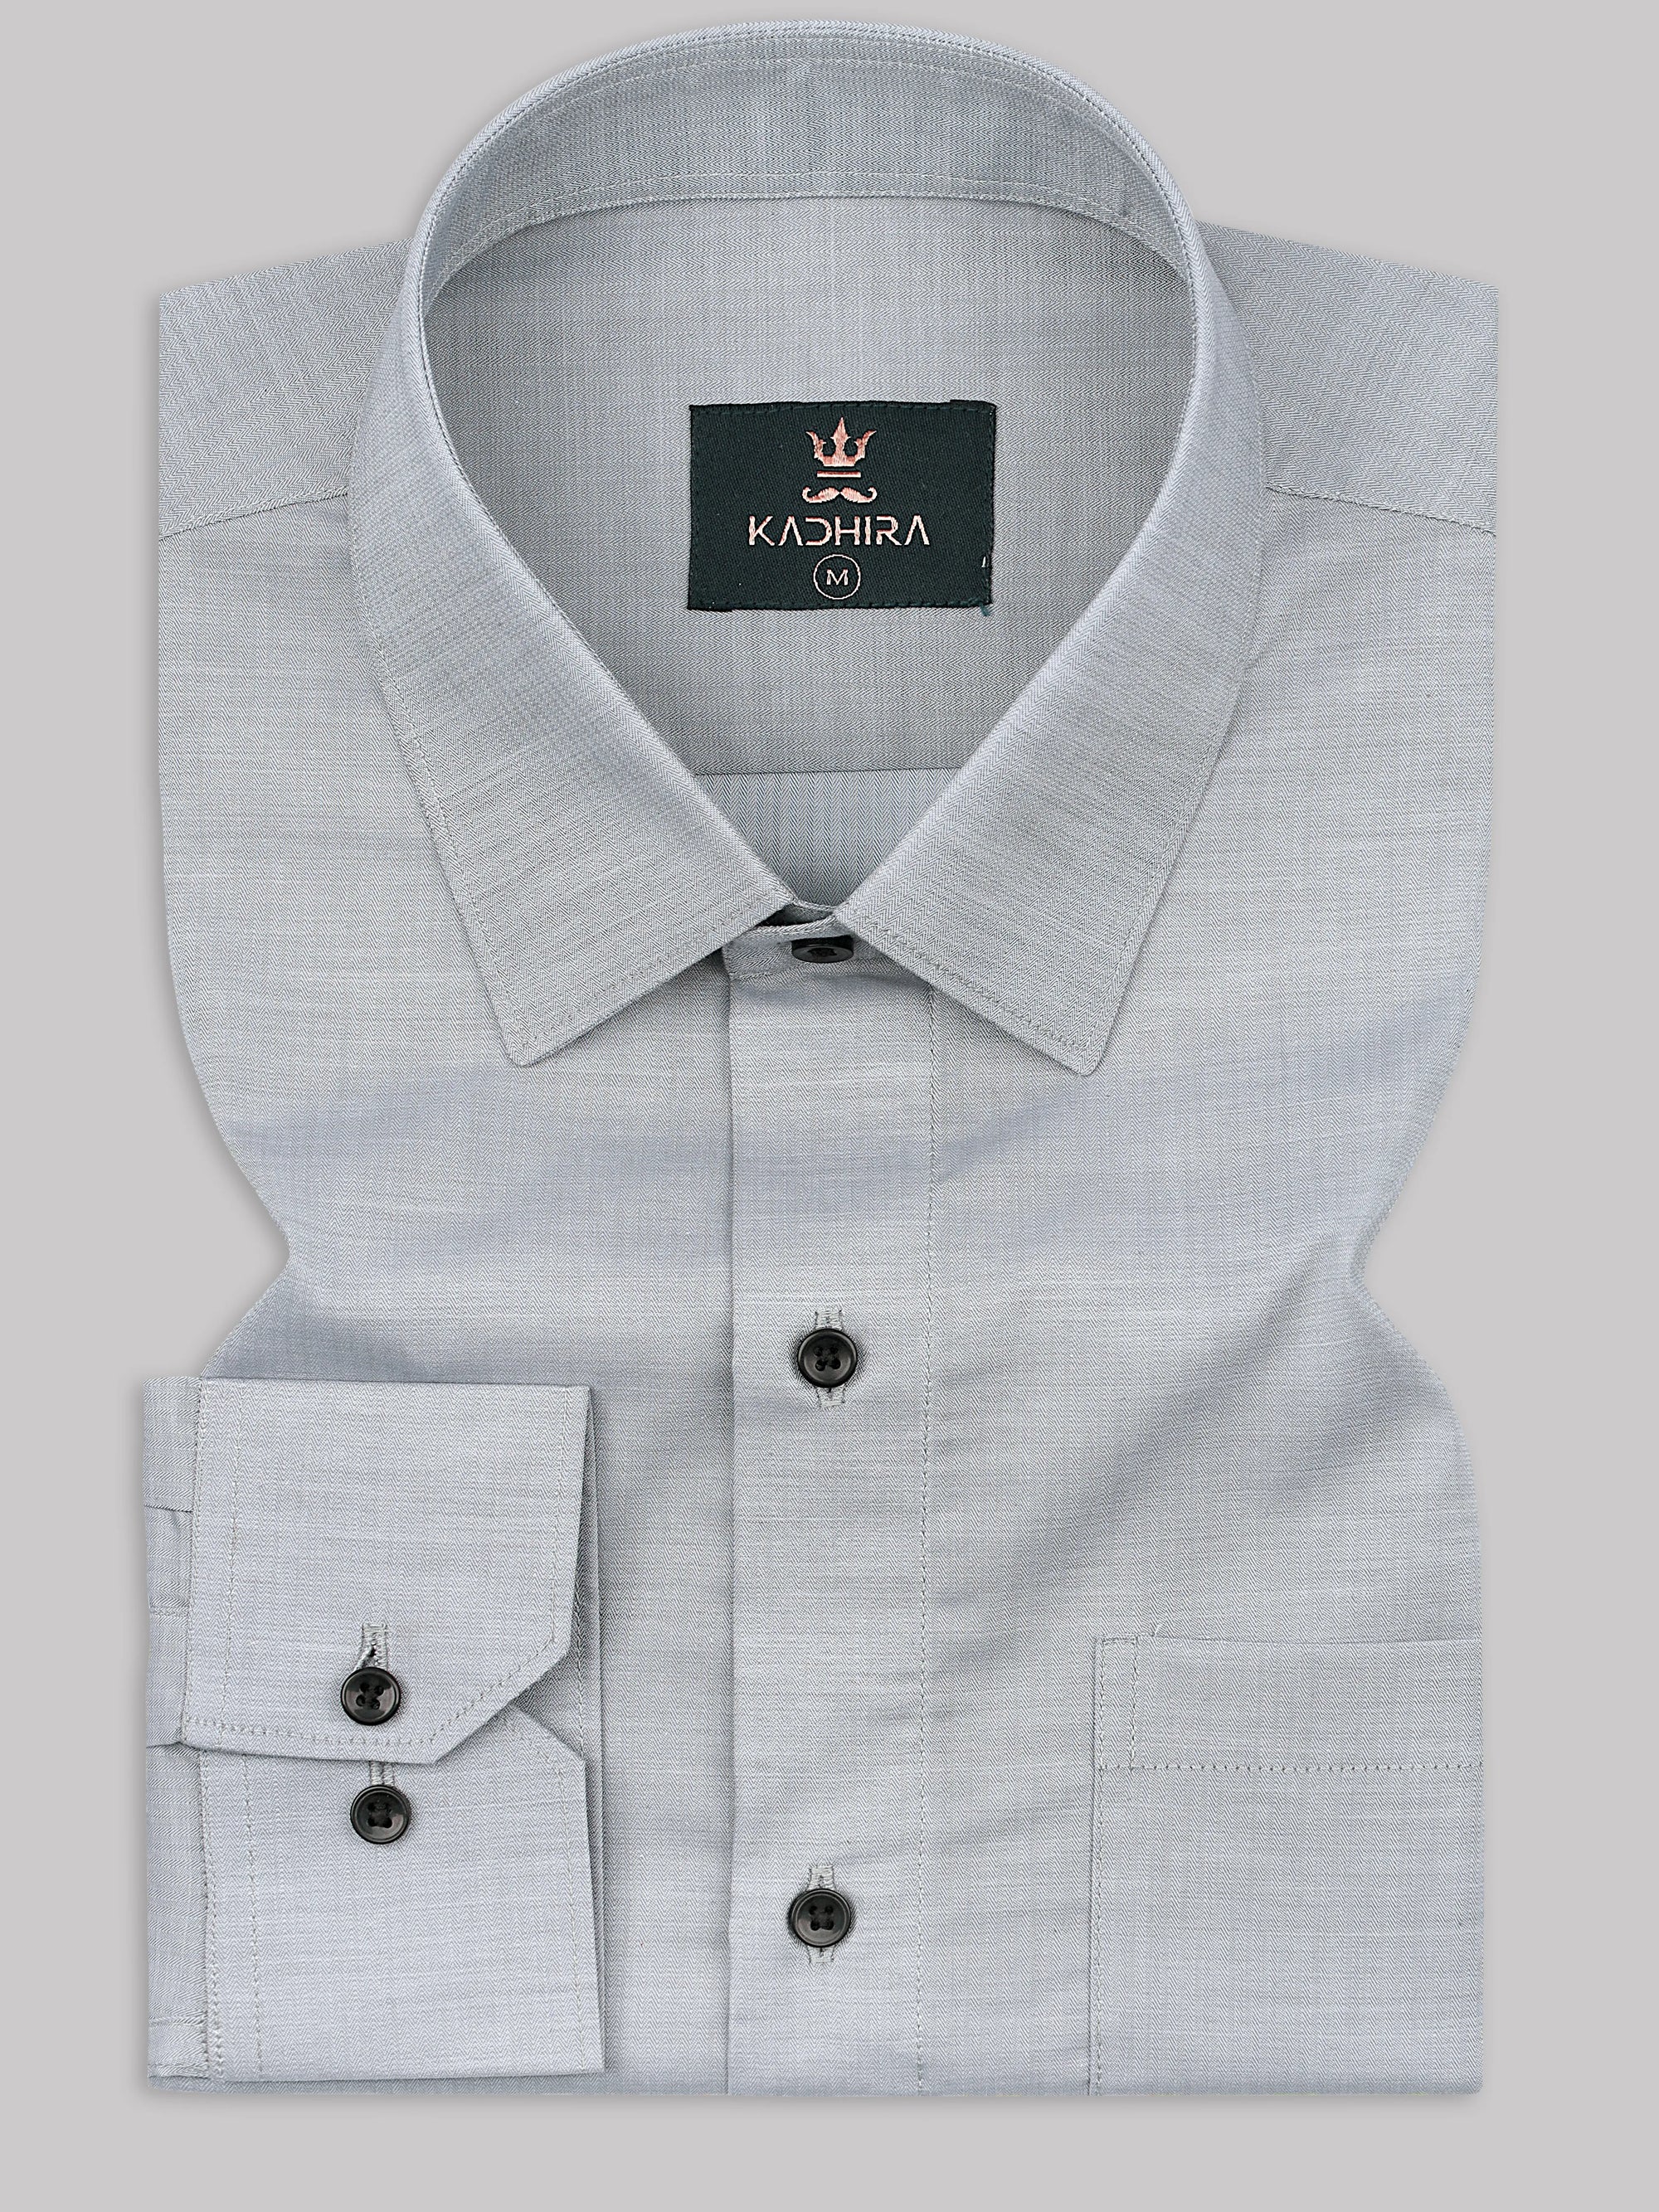 Medium Gray With White Chevron Pattern Super Luxurious Cotton Shirt